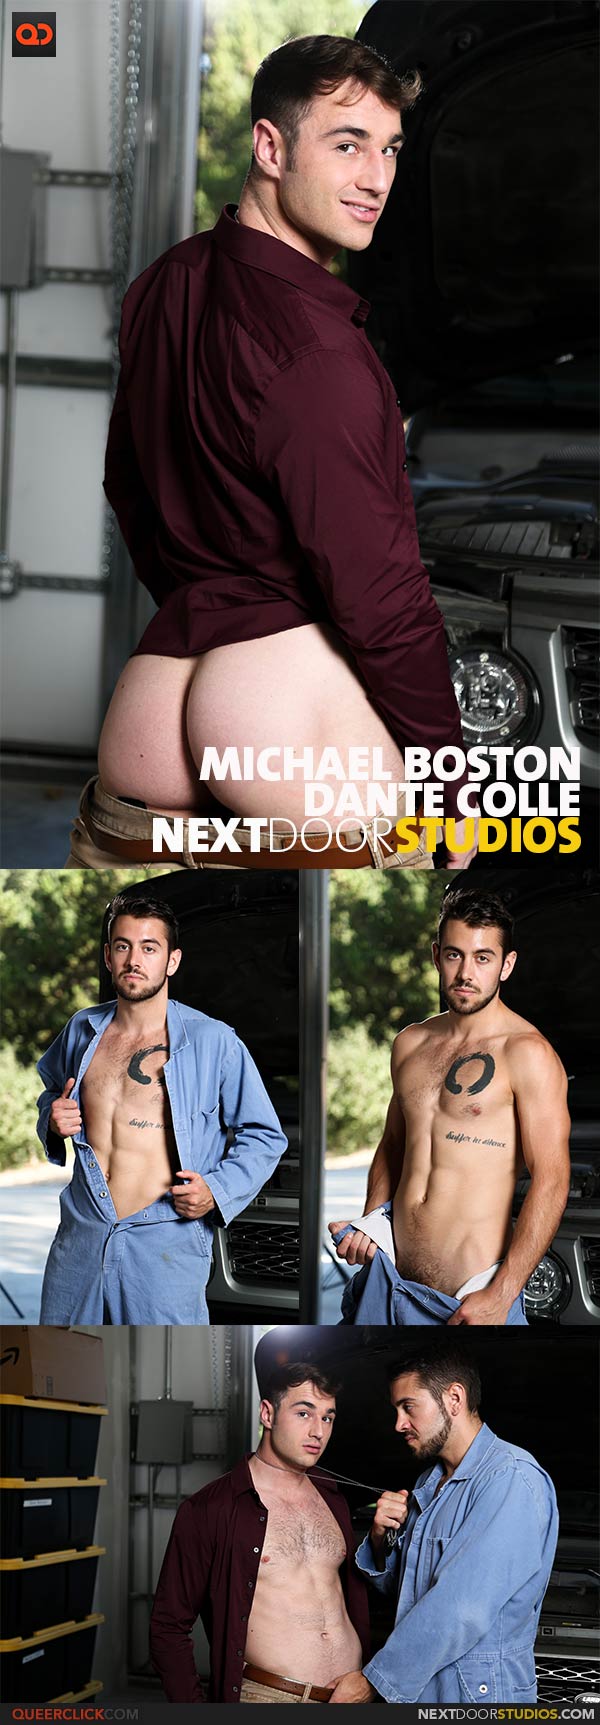 NextDoorStudios: Dante Colle and Michael Boston